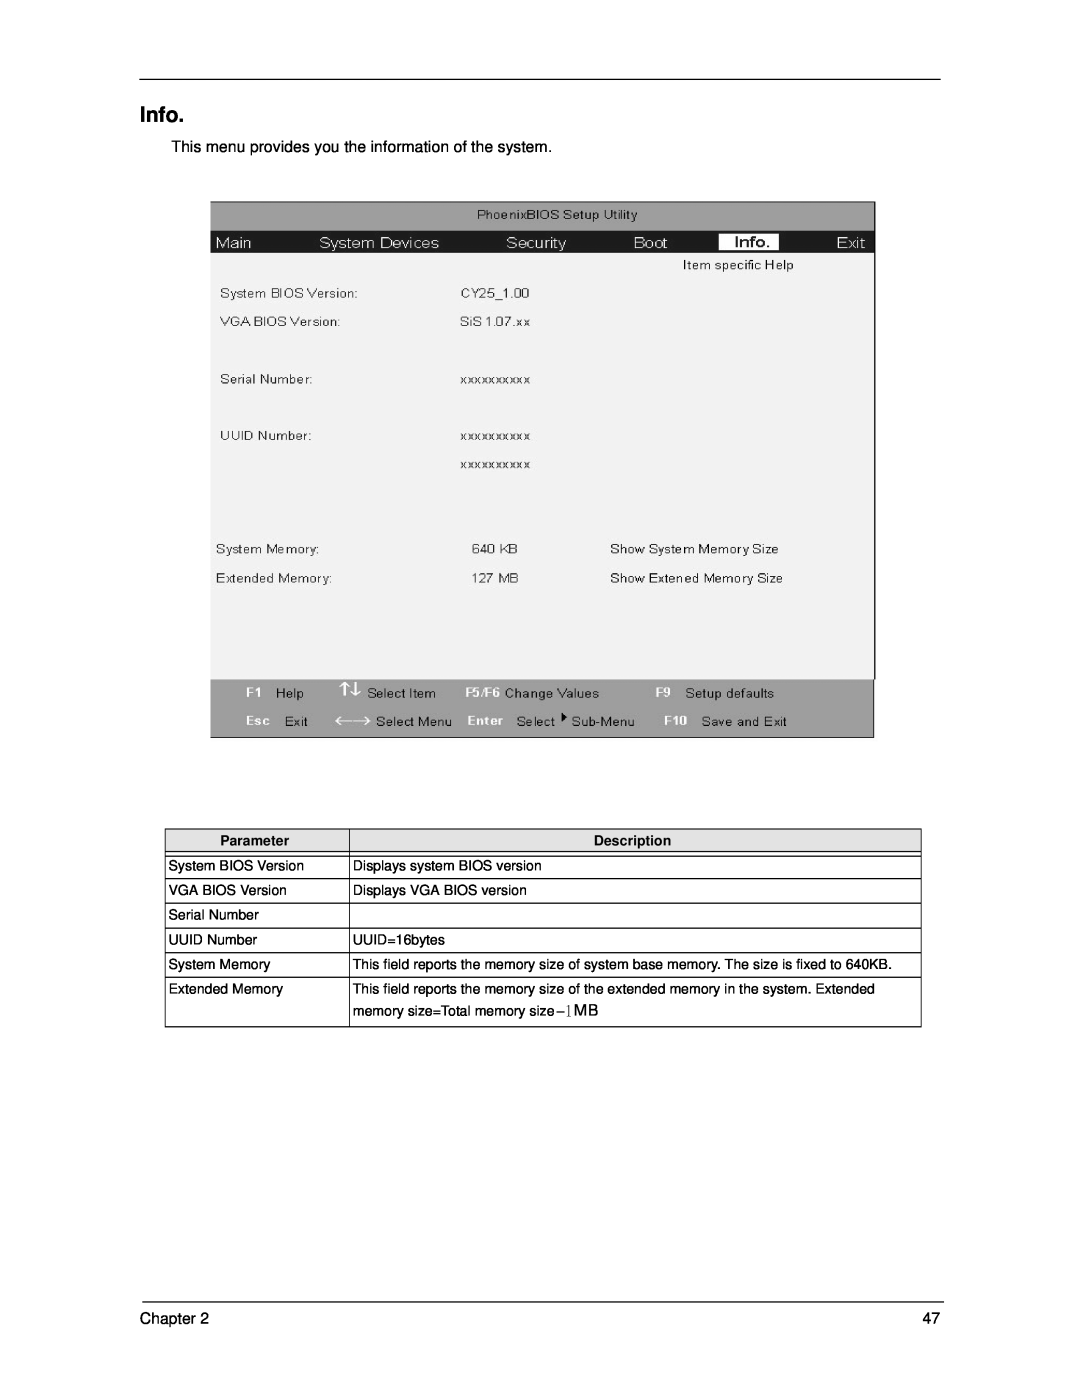 Acer 270 manual Info, Parameter, Description 